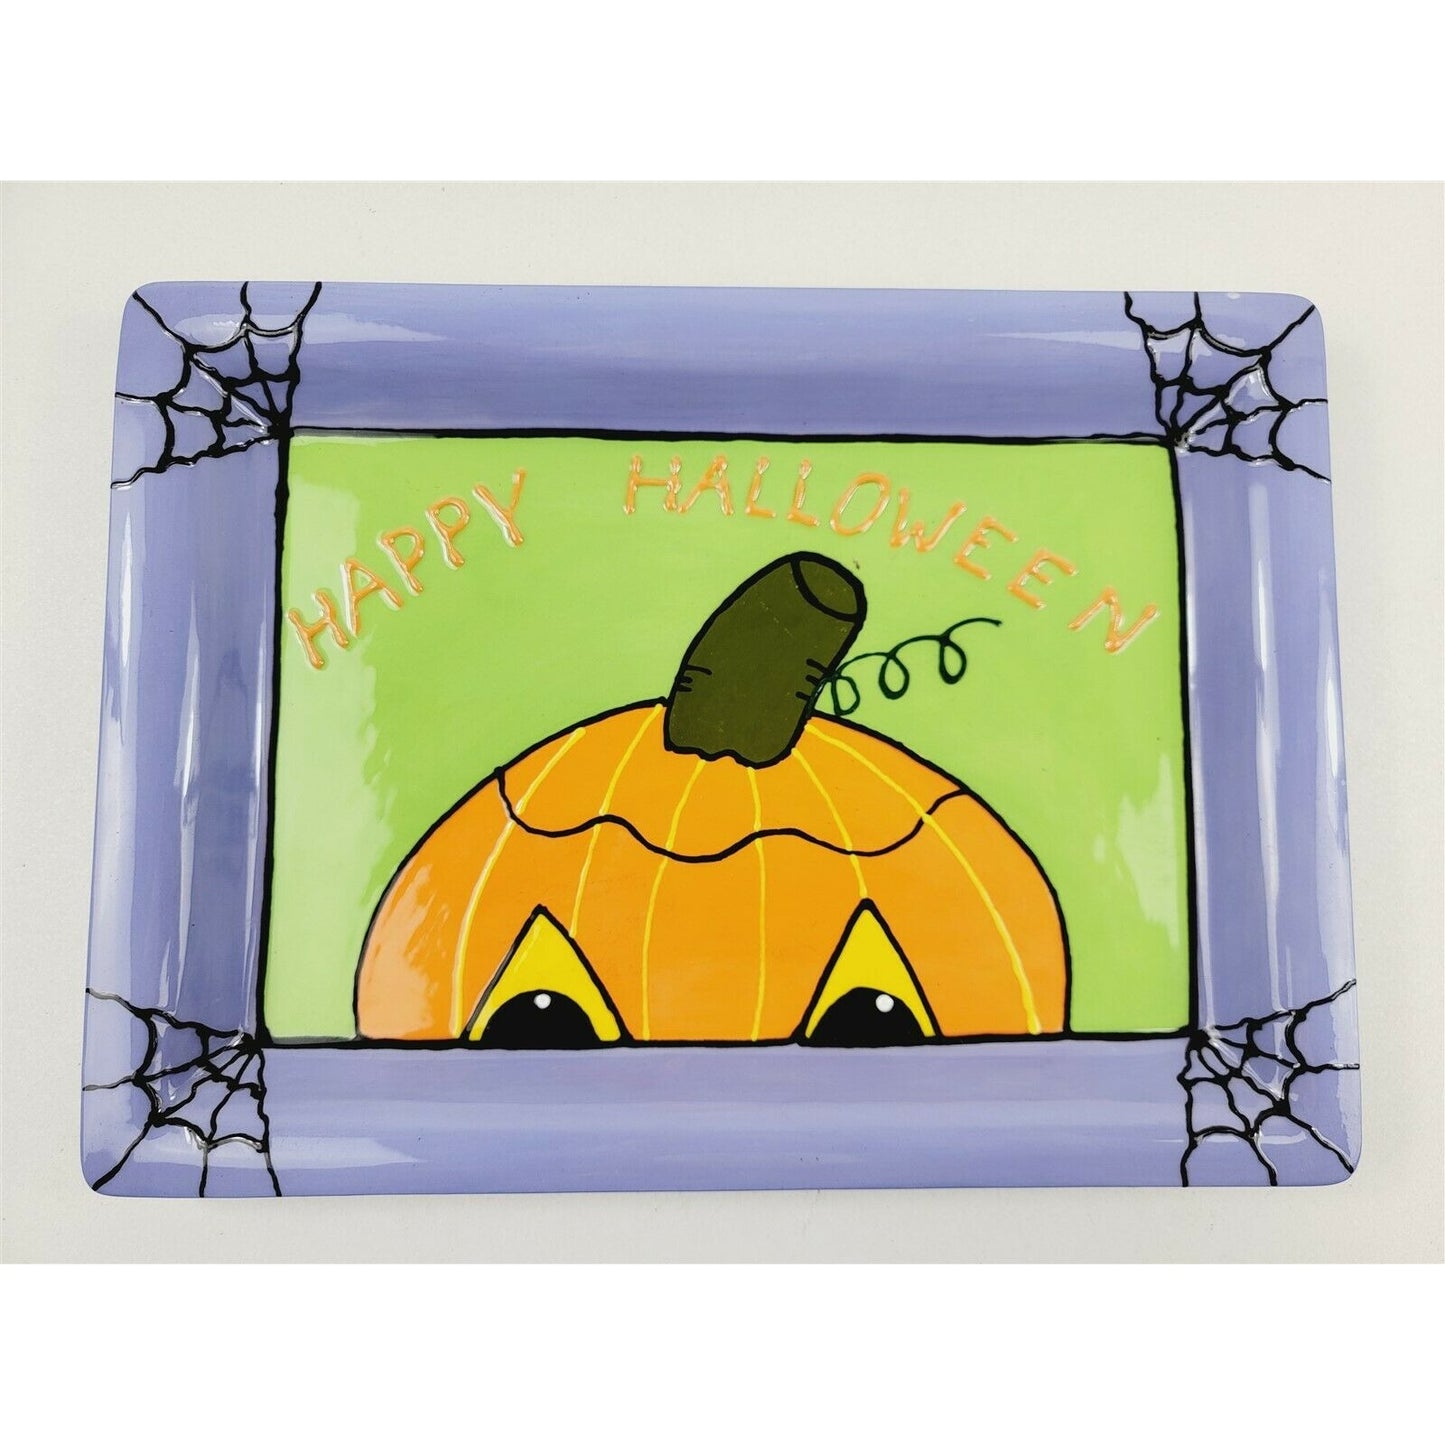 4 Hand Painted Halloween Trick or Treat Plates Serving Platter Ghost Cat Pumpkin